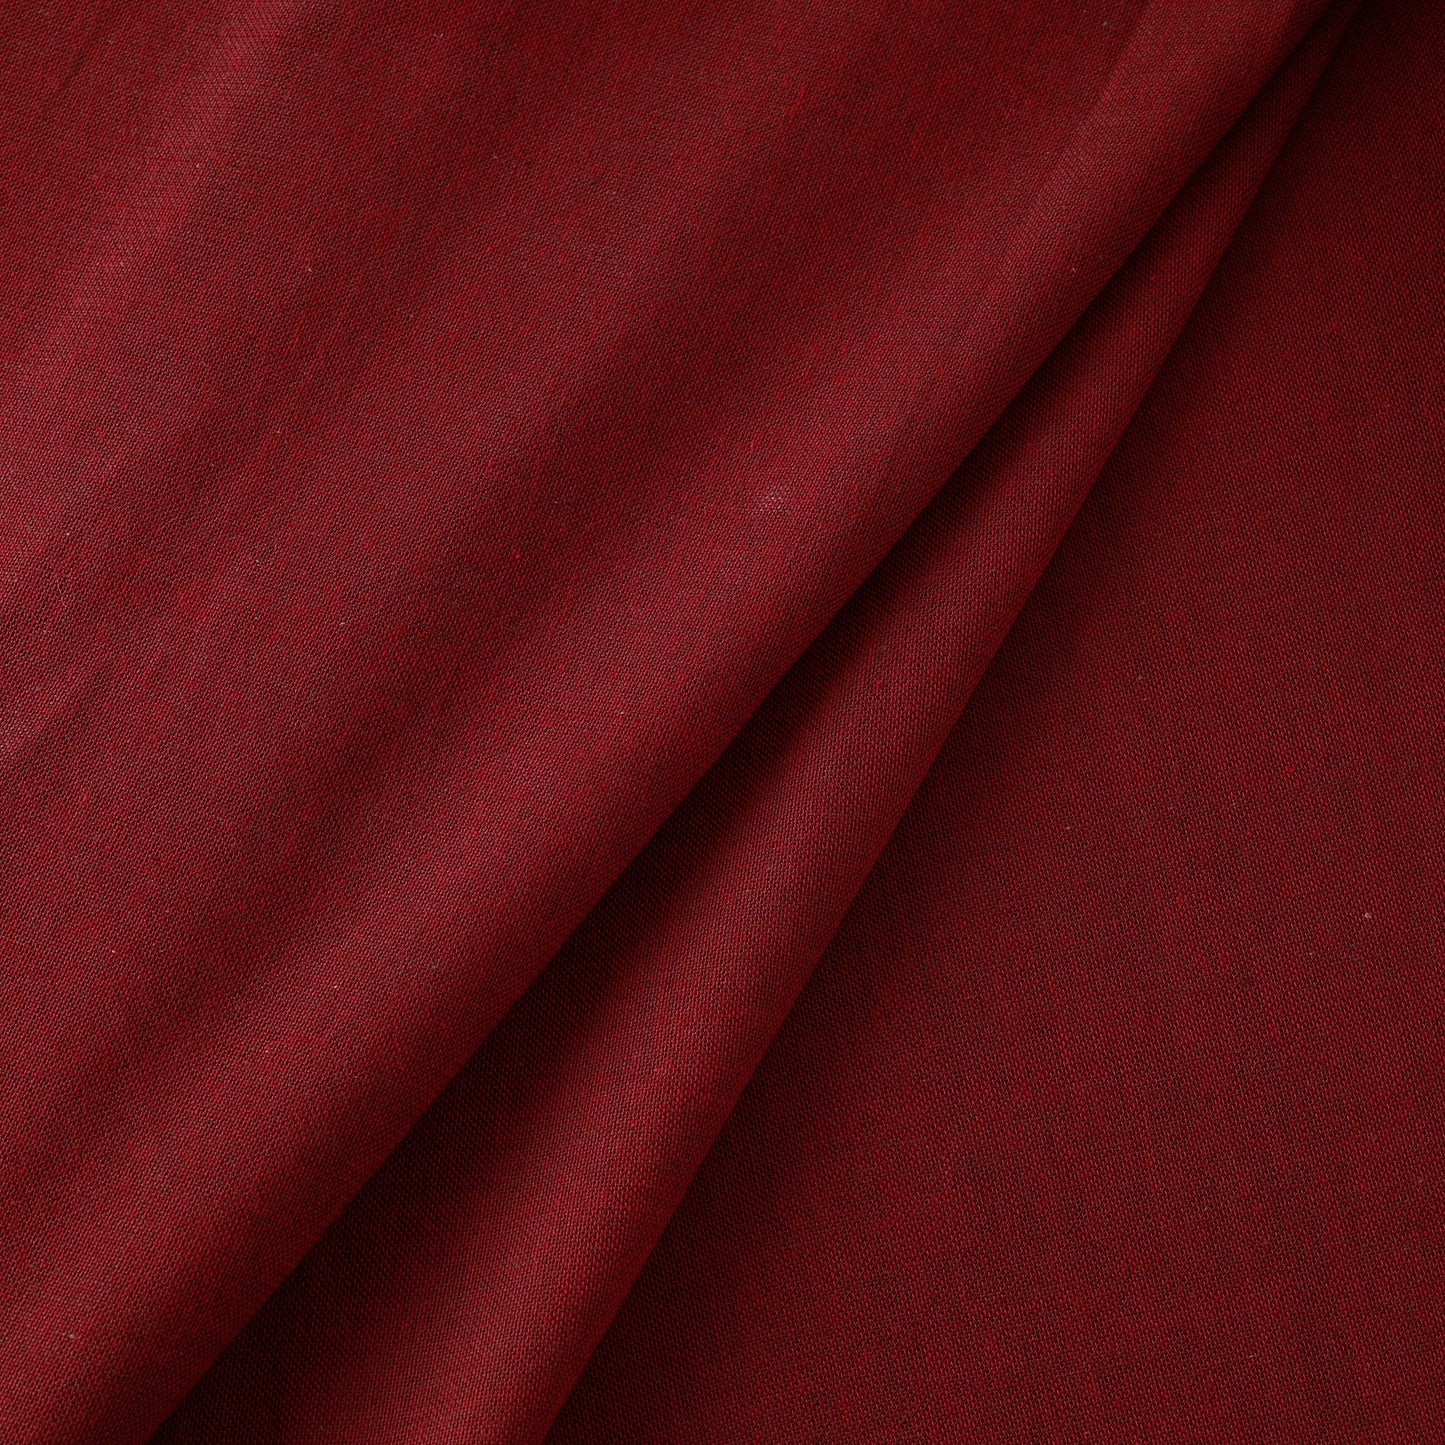 Maroon - Prewashed Fine Cotton Handloom Fabric